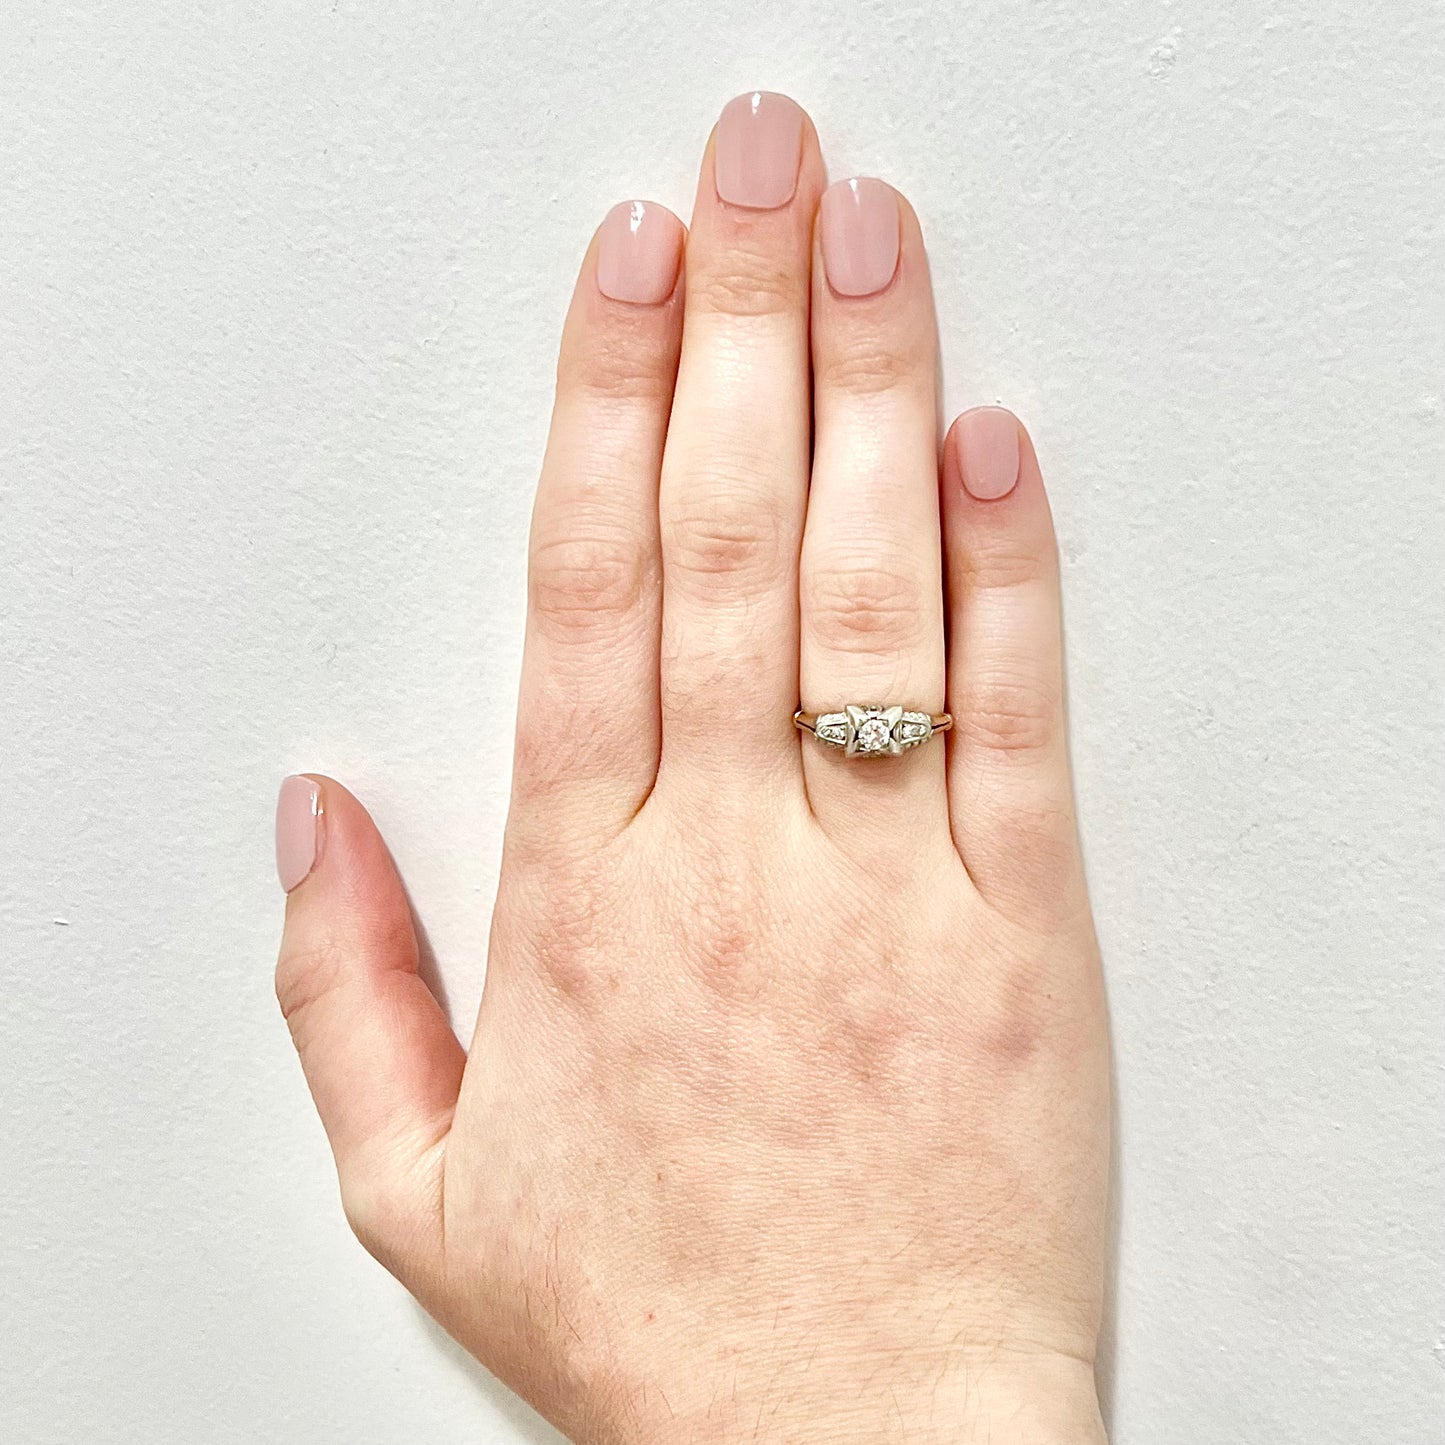 CLEARANCE 40% OFF - Vintage Art Deco 14 Karat Two-Tone Gold Carat Diamond Engagement Ring